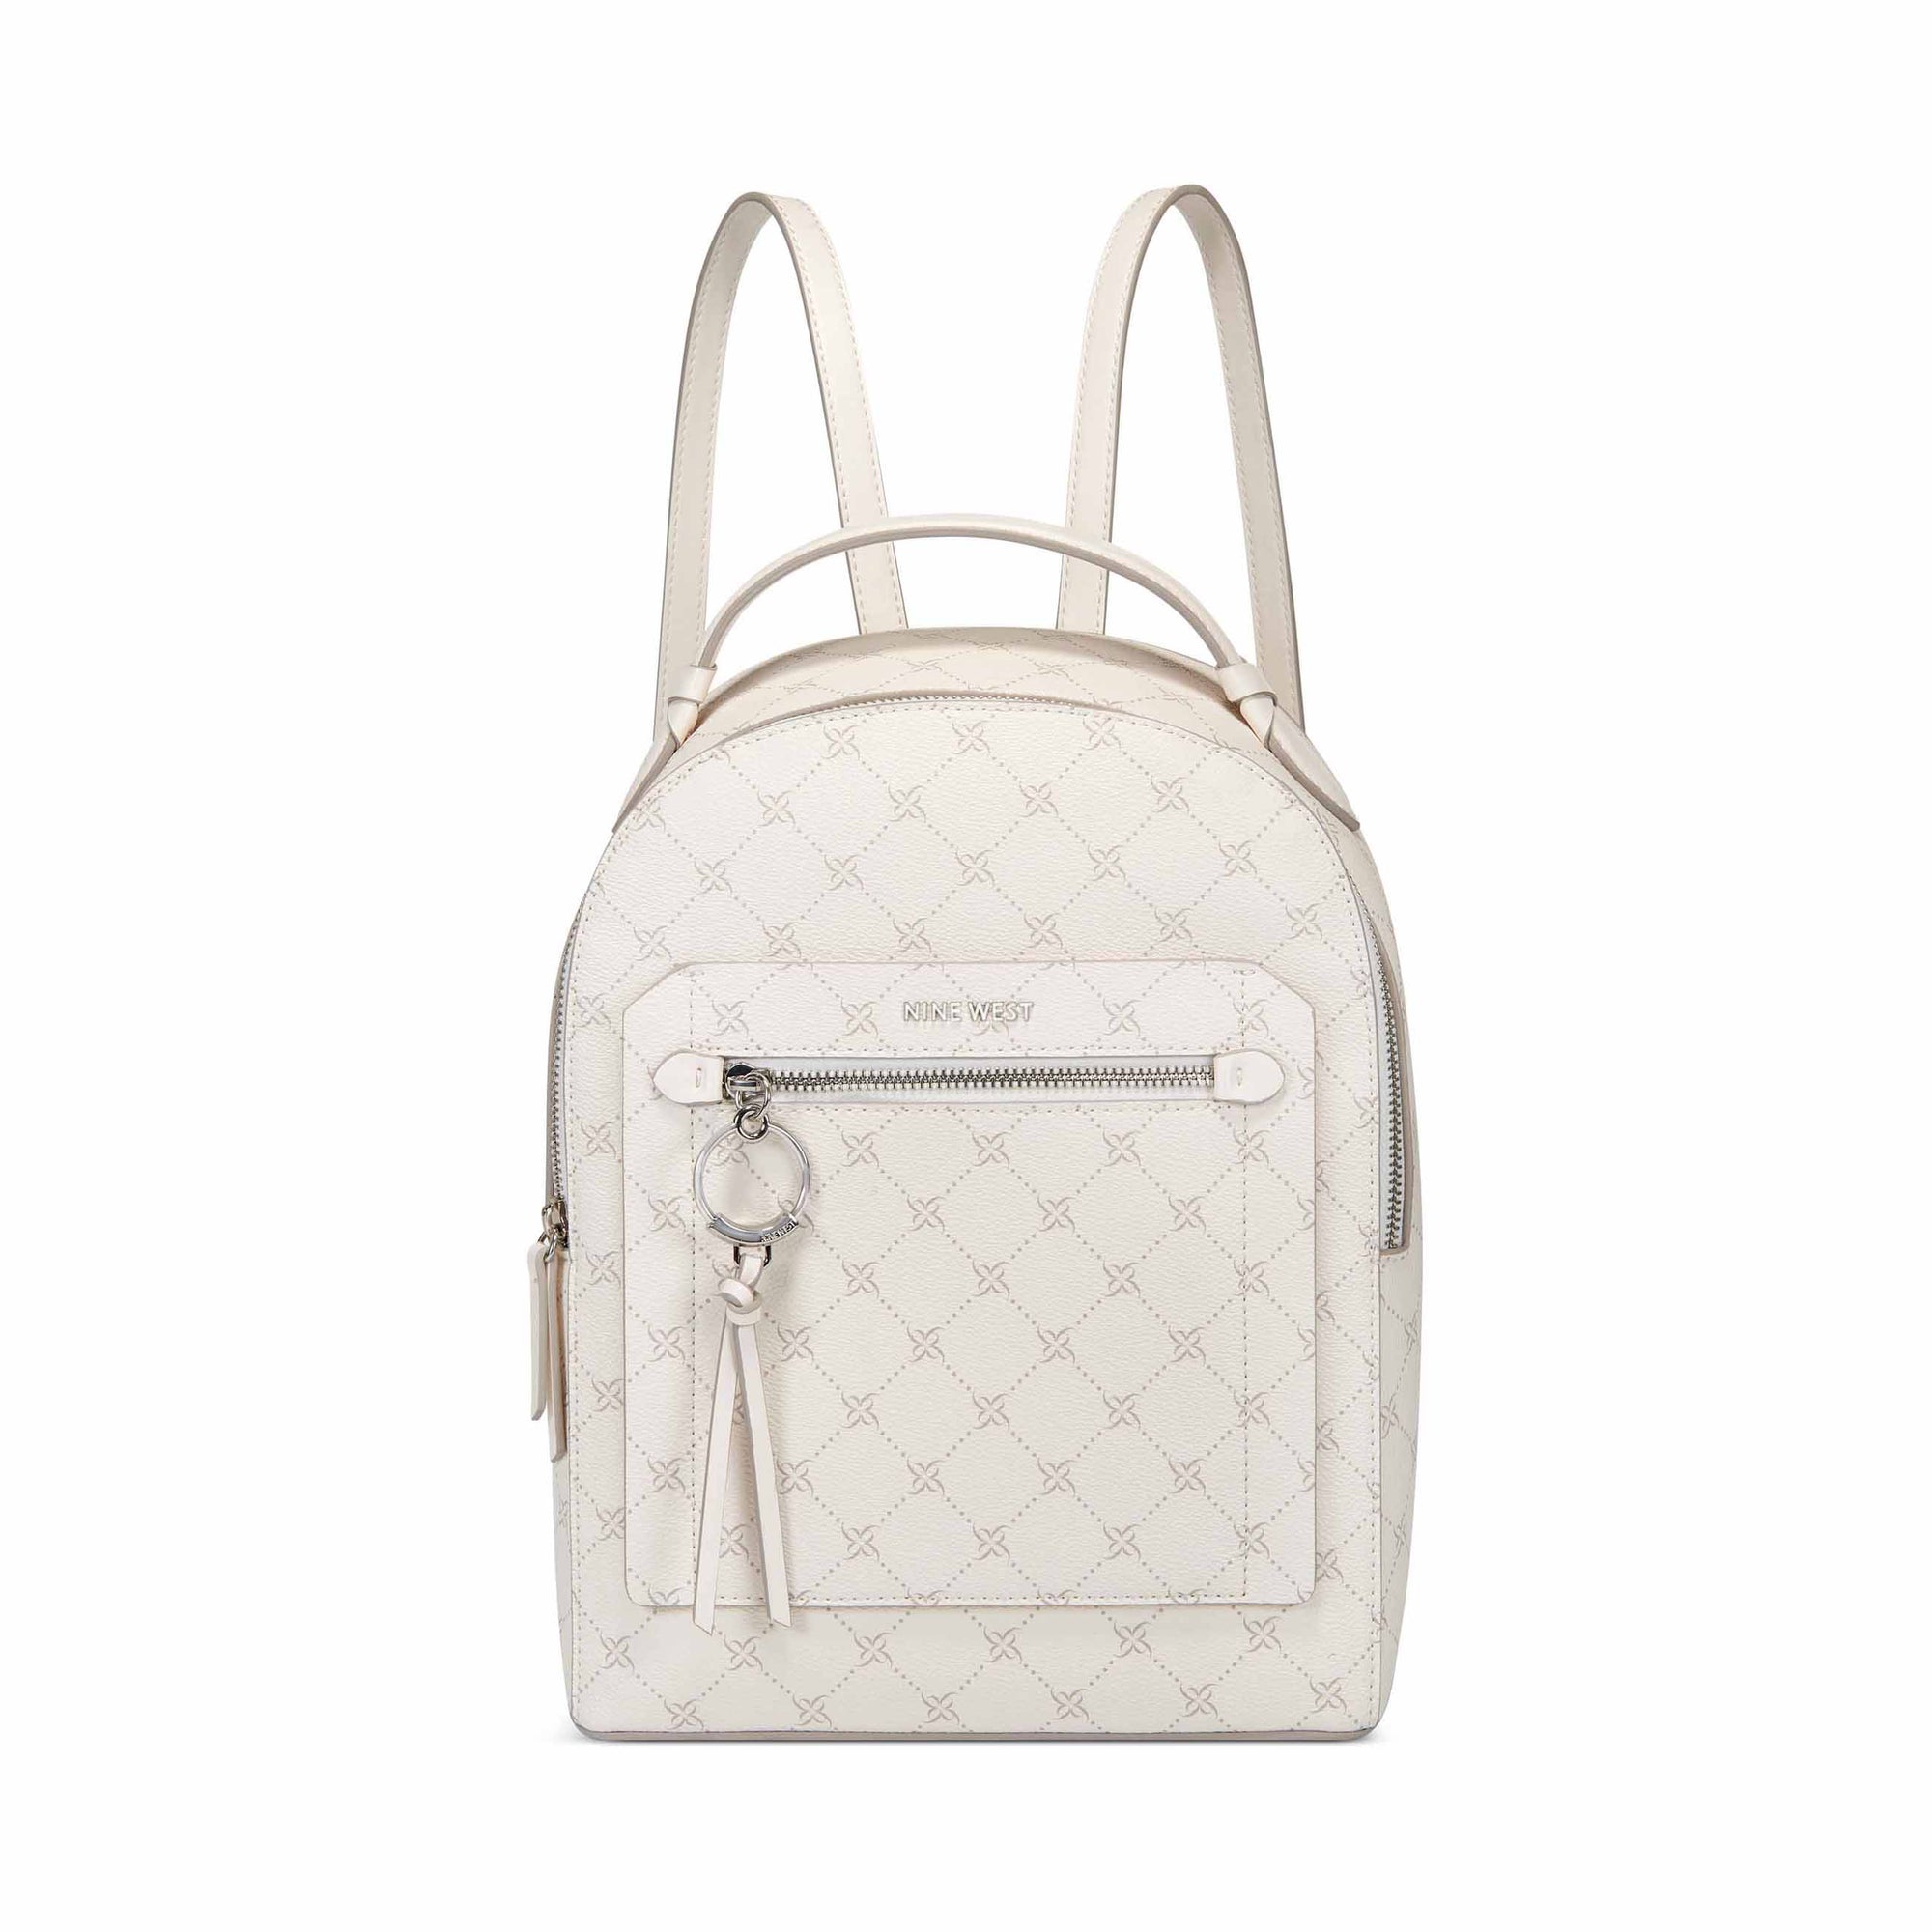 Nine West Harper Convertible Backpack Purse white | eBay